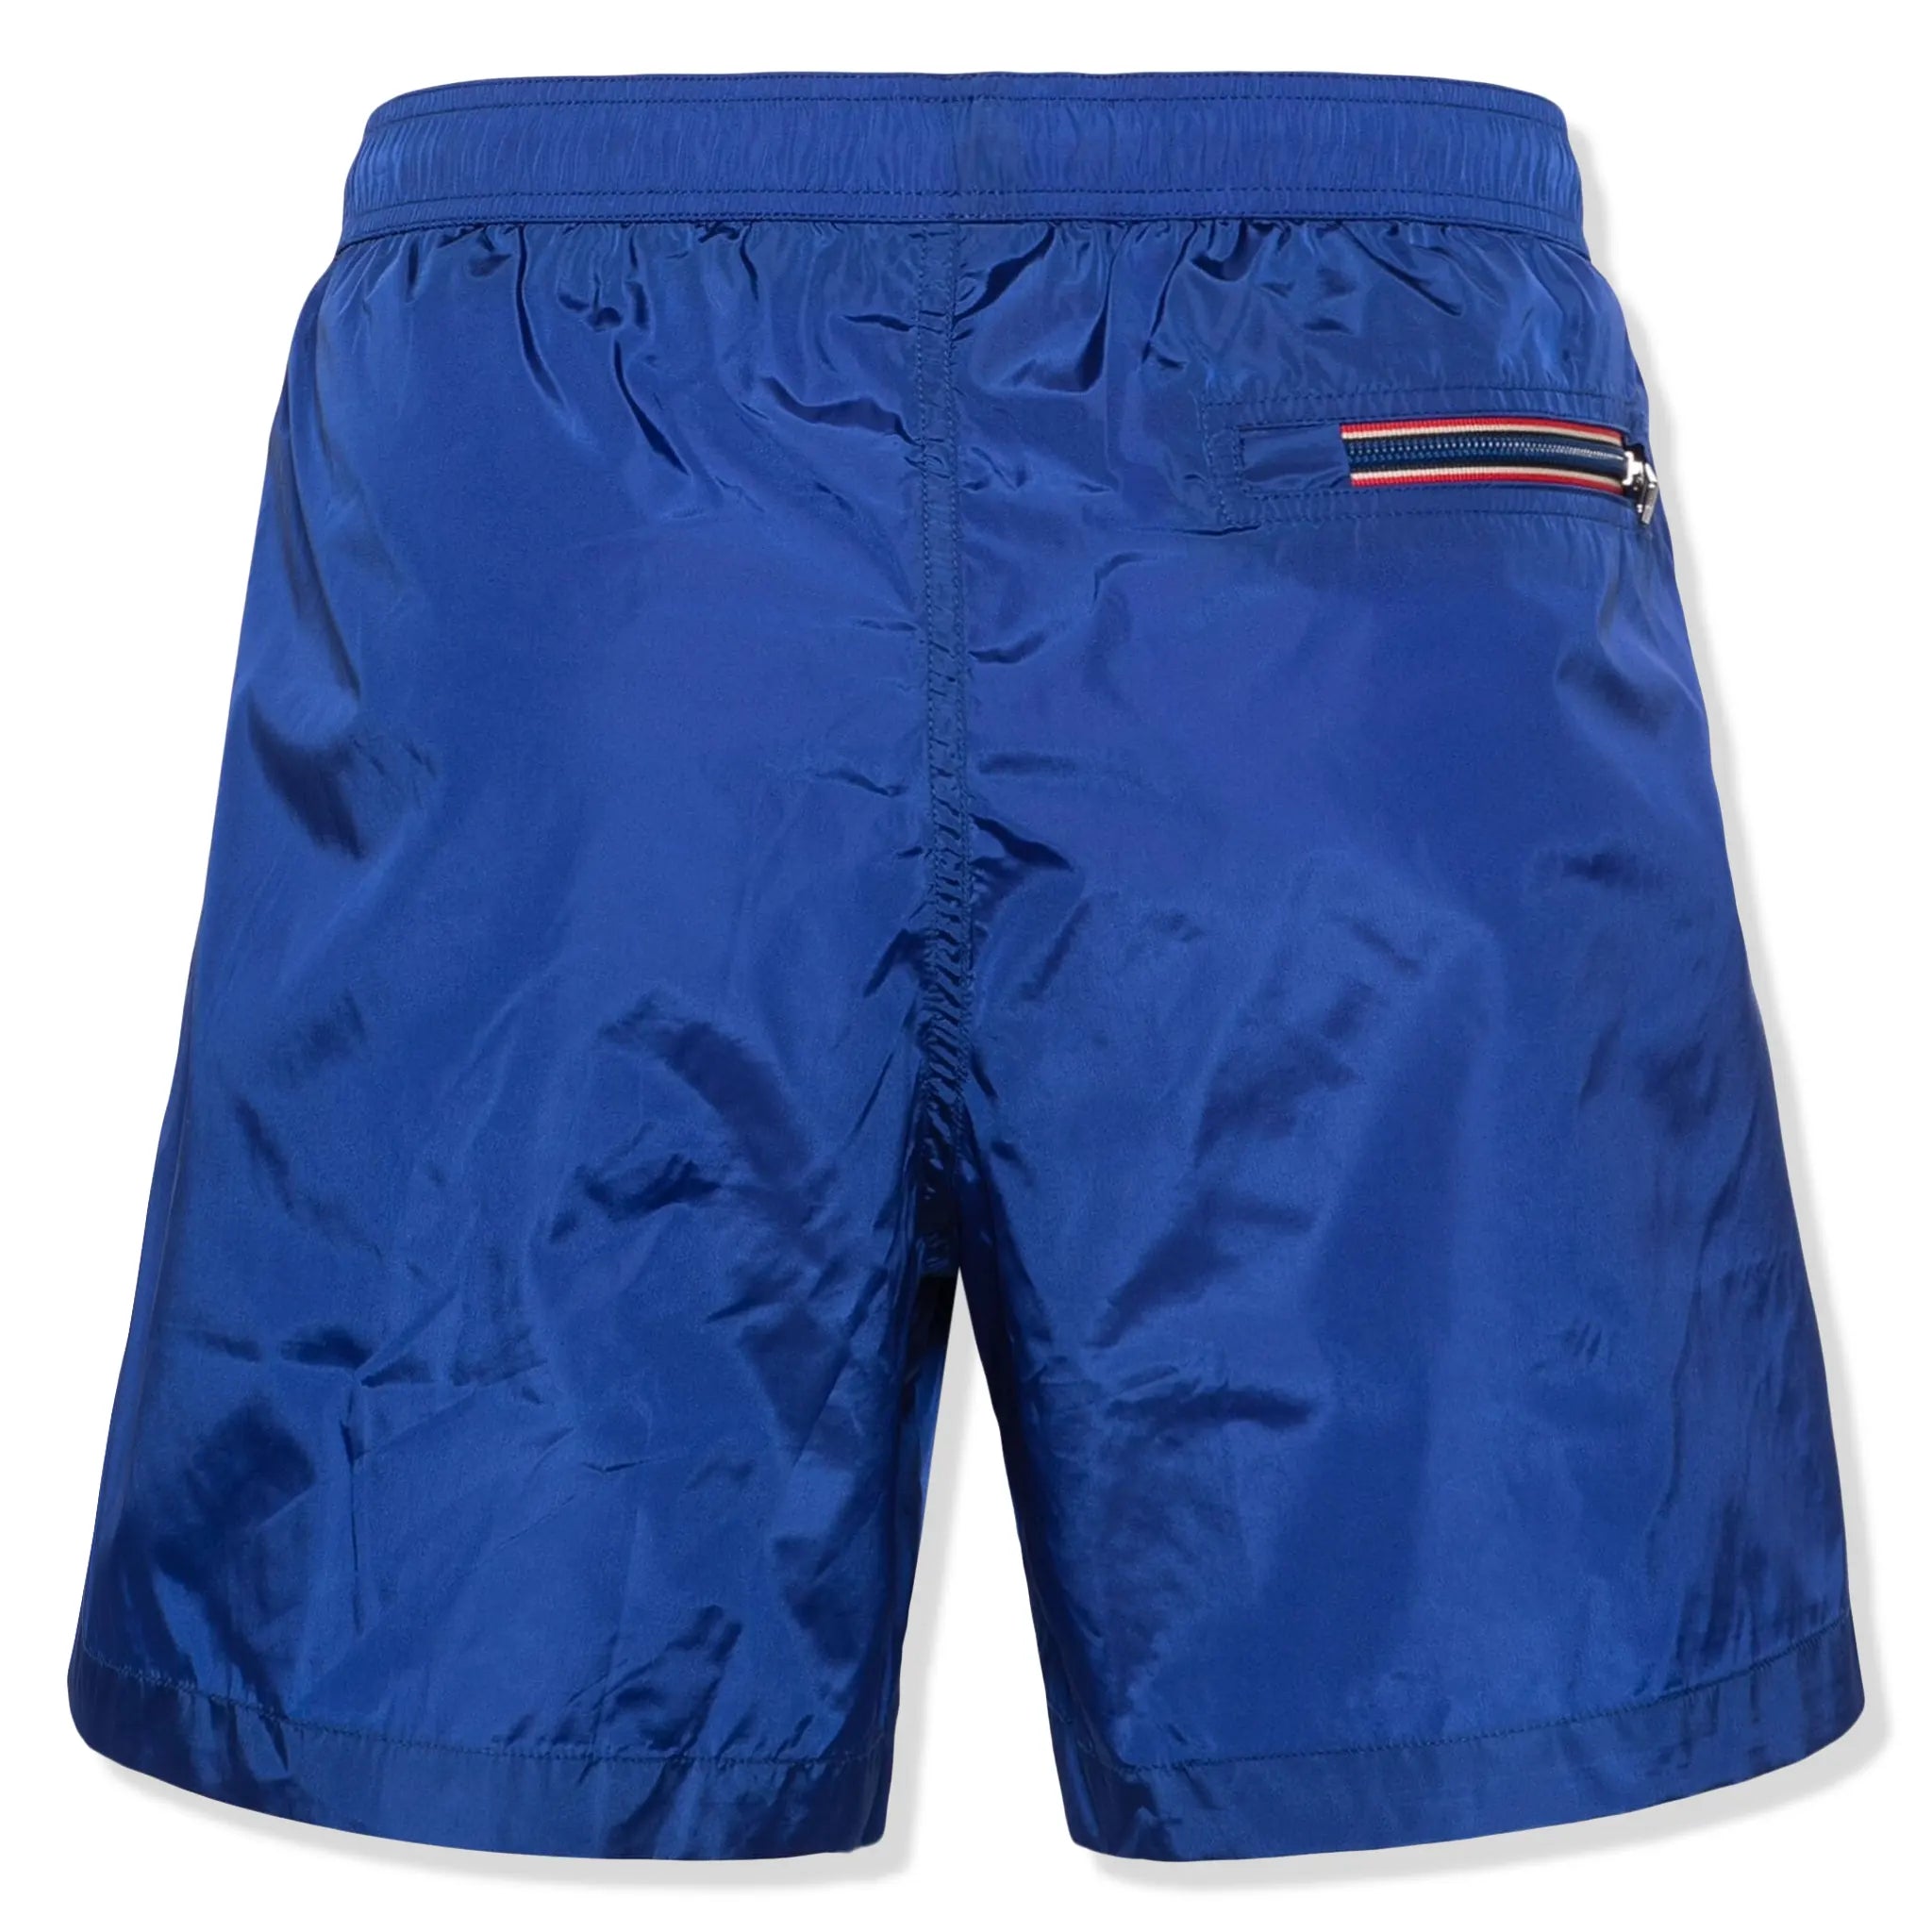 Back view of Moncler Royal Blue Swim Shorts J10912C0000453326